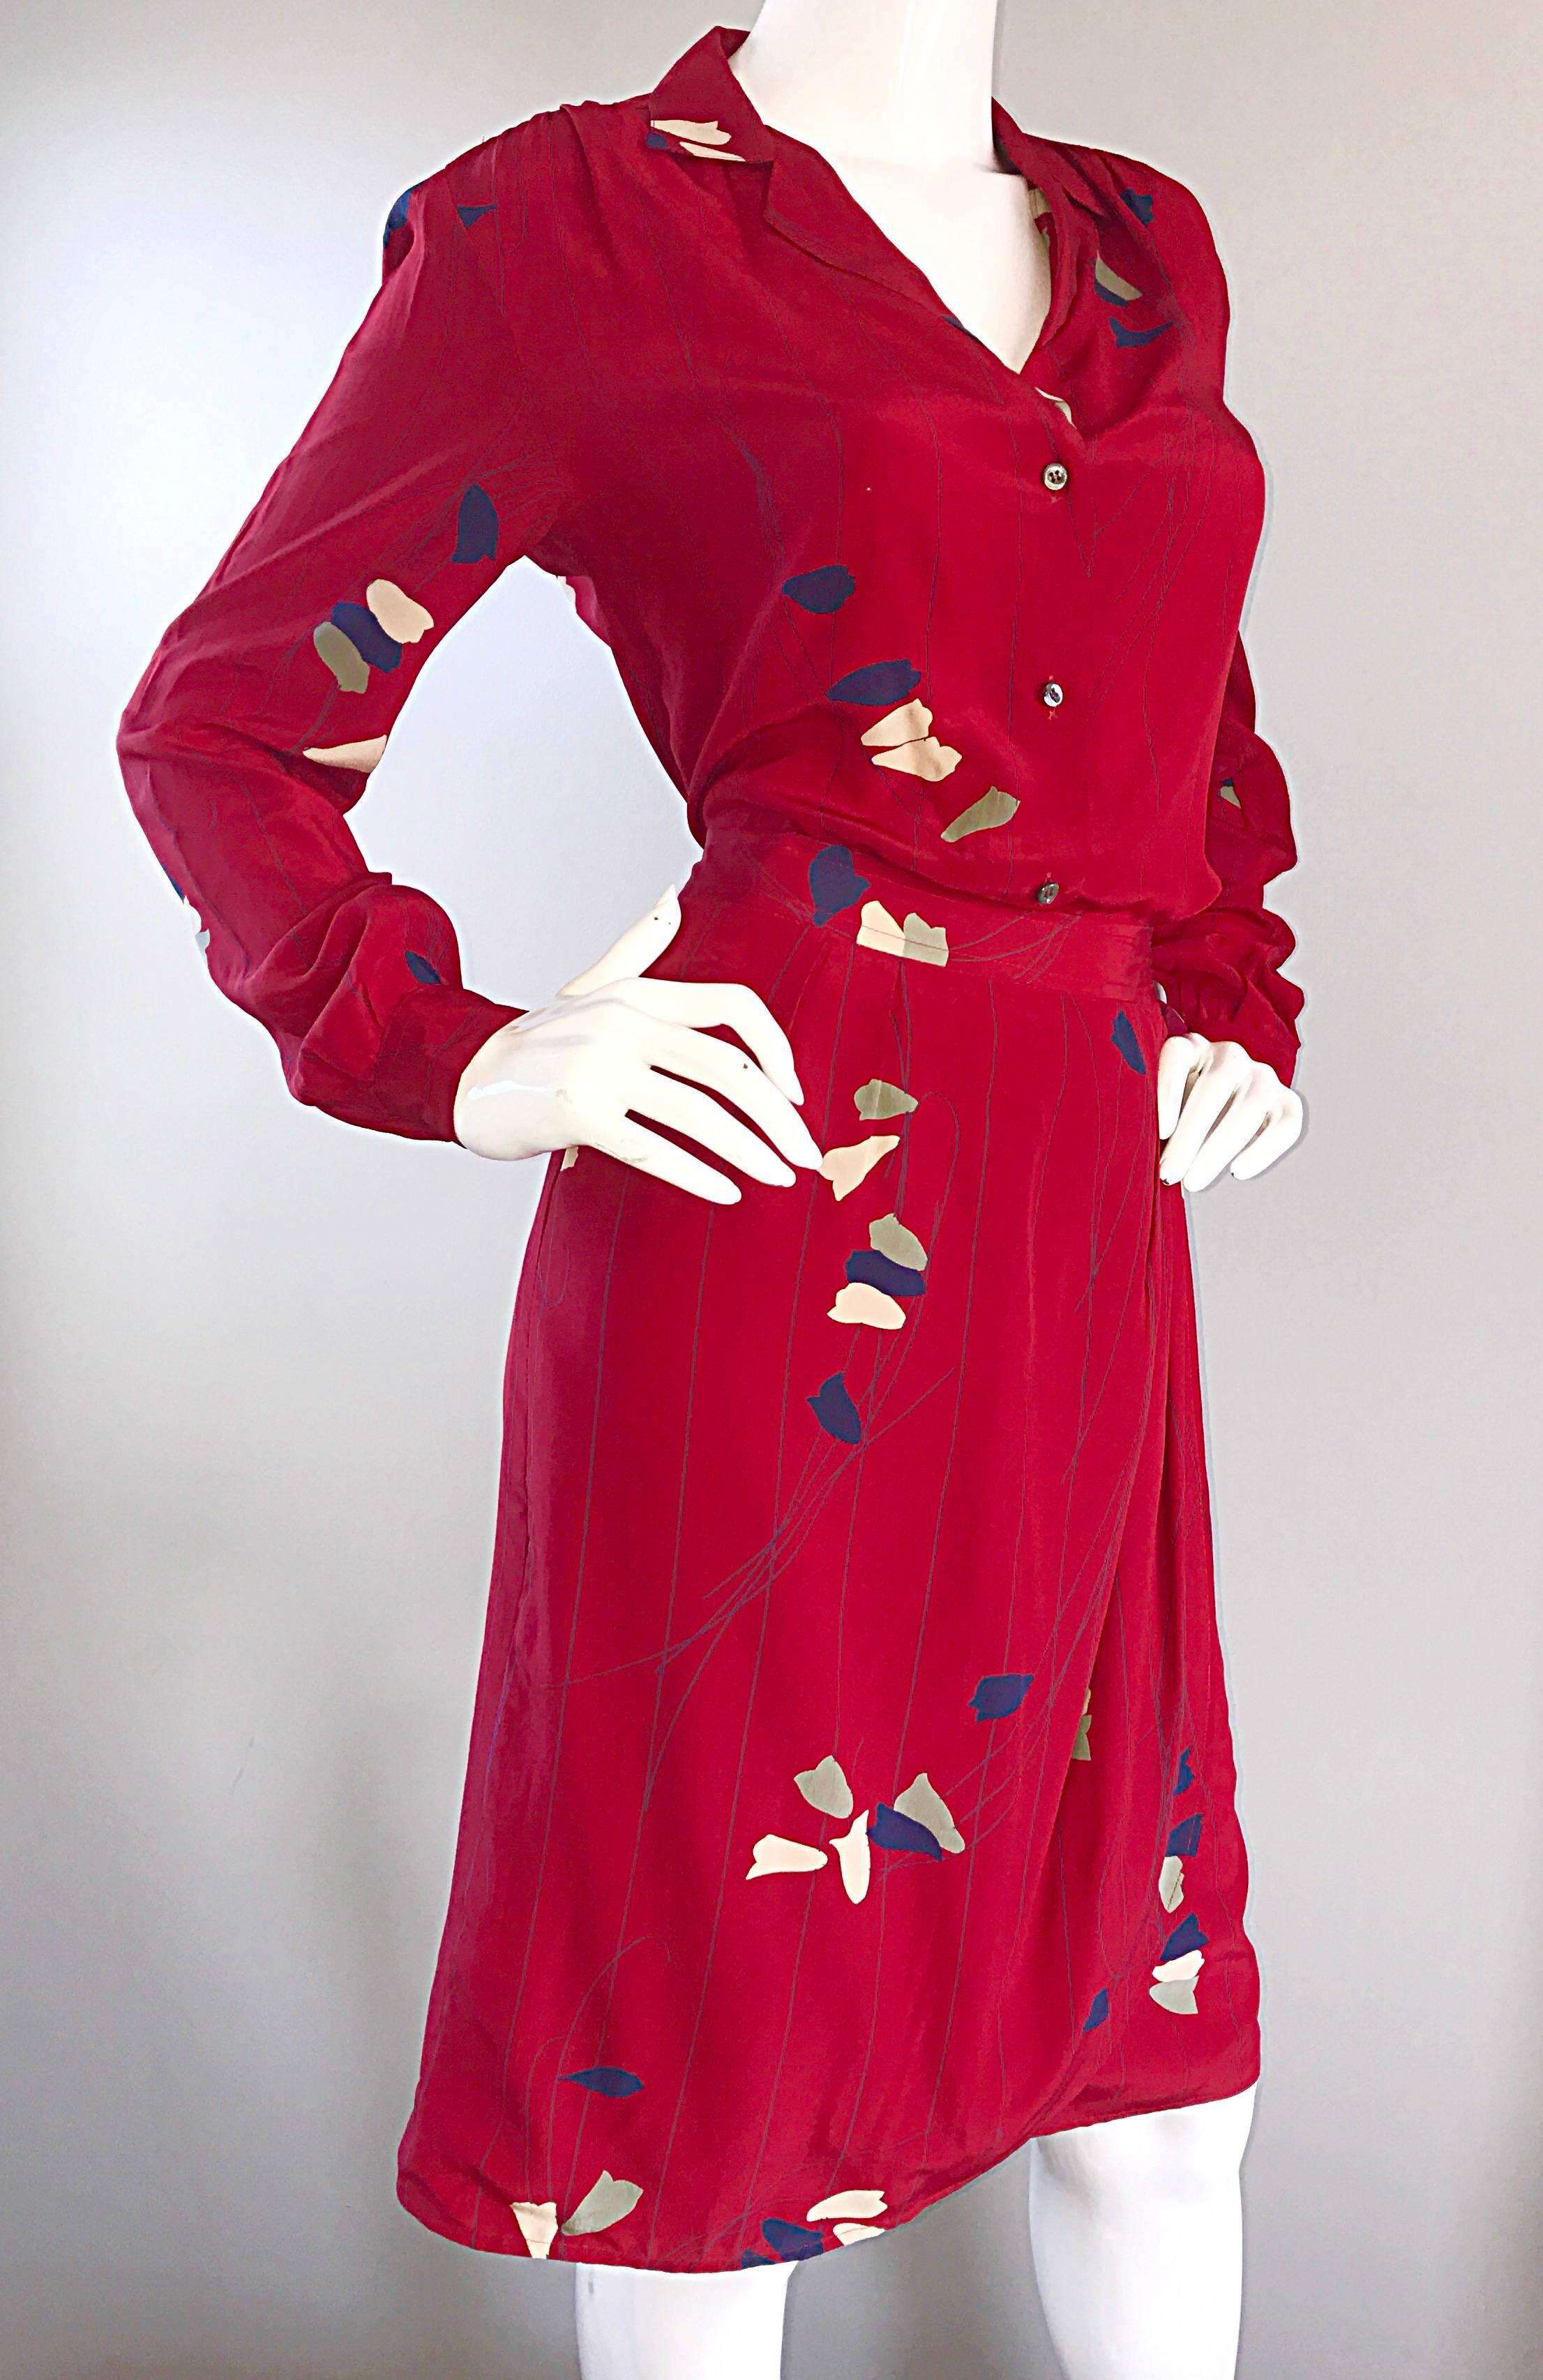 1970s Alan Austin Italian Red Silk Vintage Blouse and Skirt 70s Dress Ensemble For Sale 1